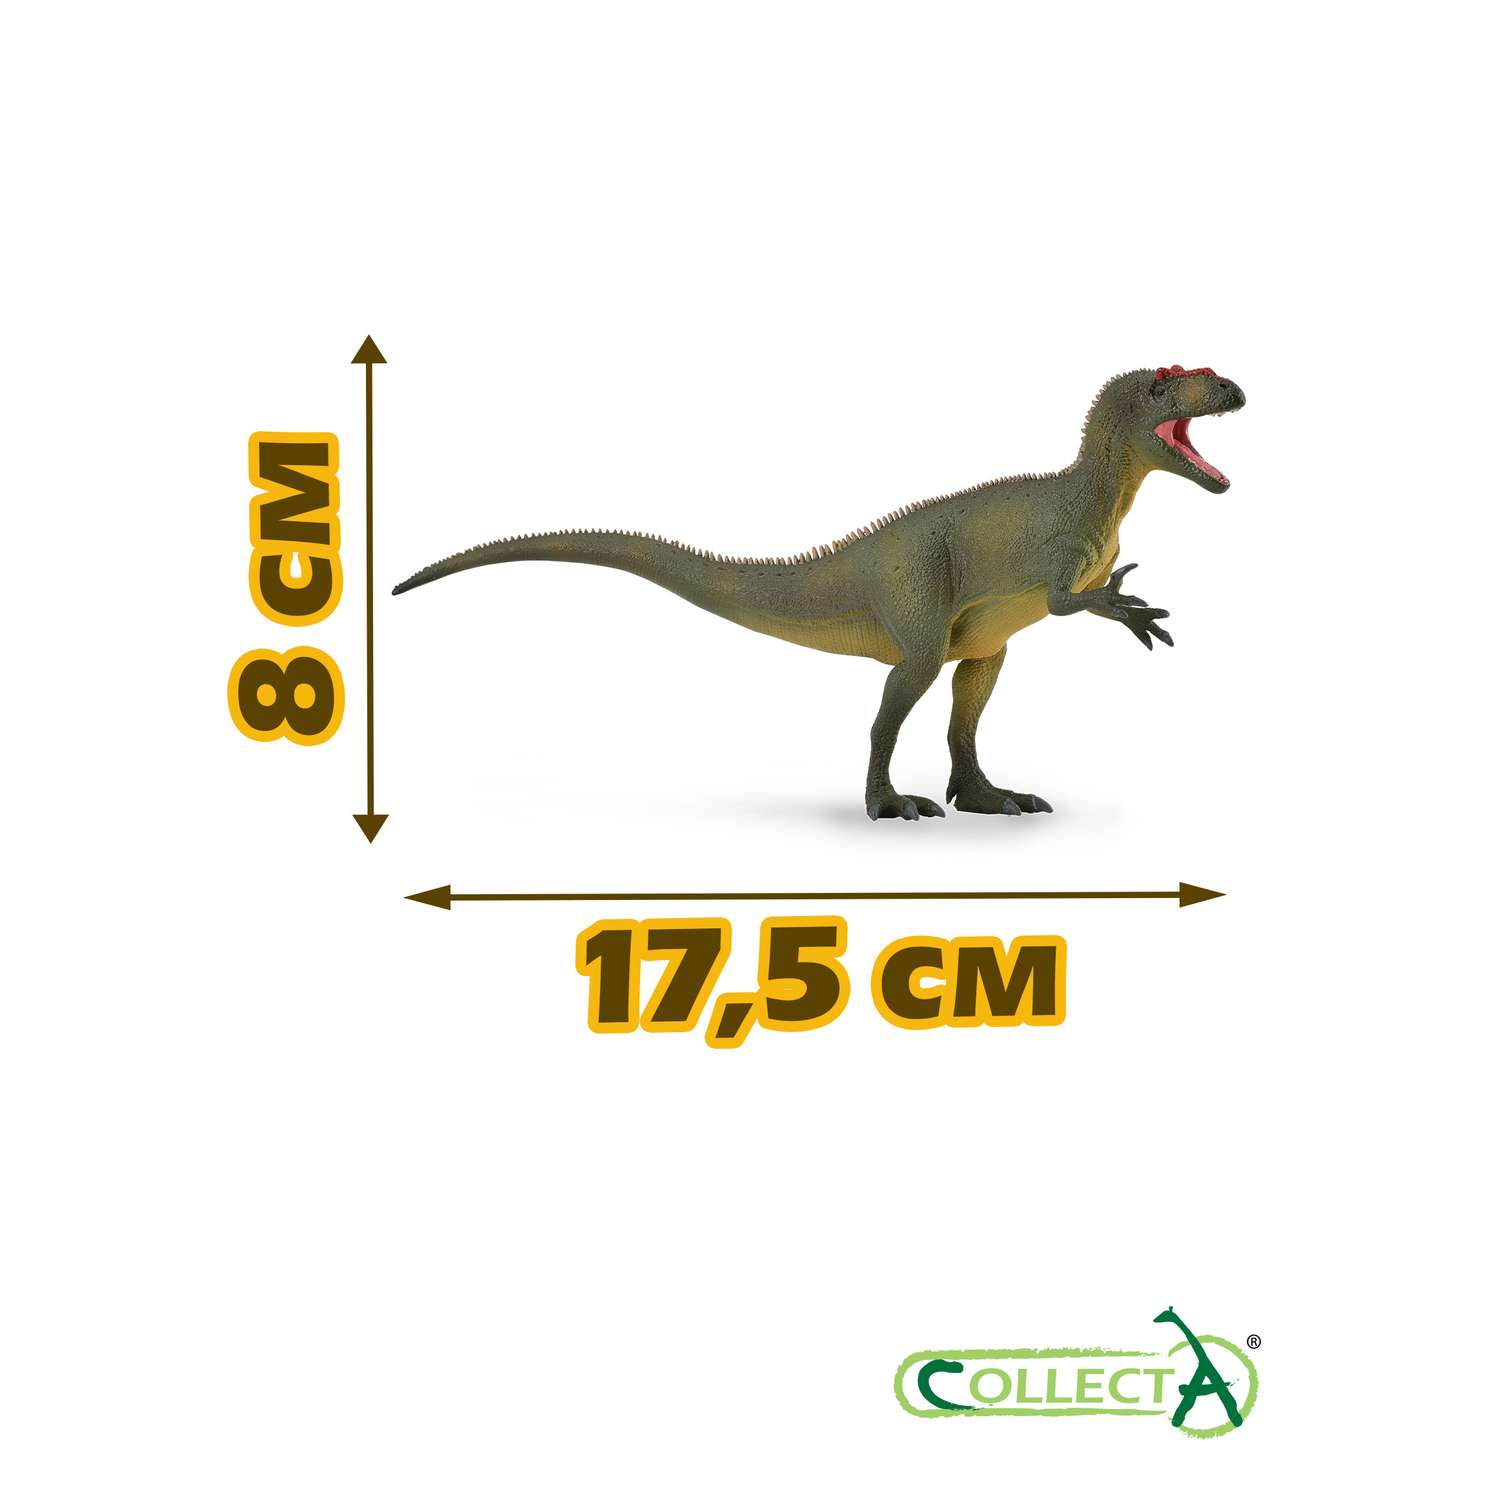 Игрушка Collecta Аллозавр фигурка динозавра - фото 2